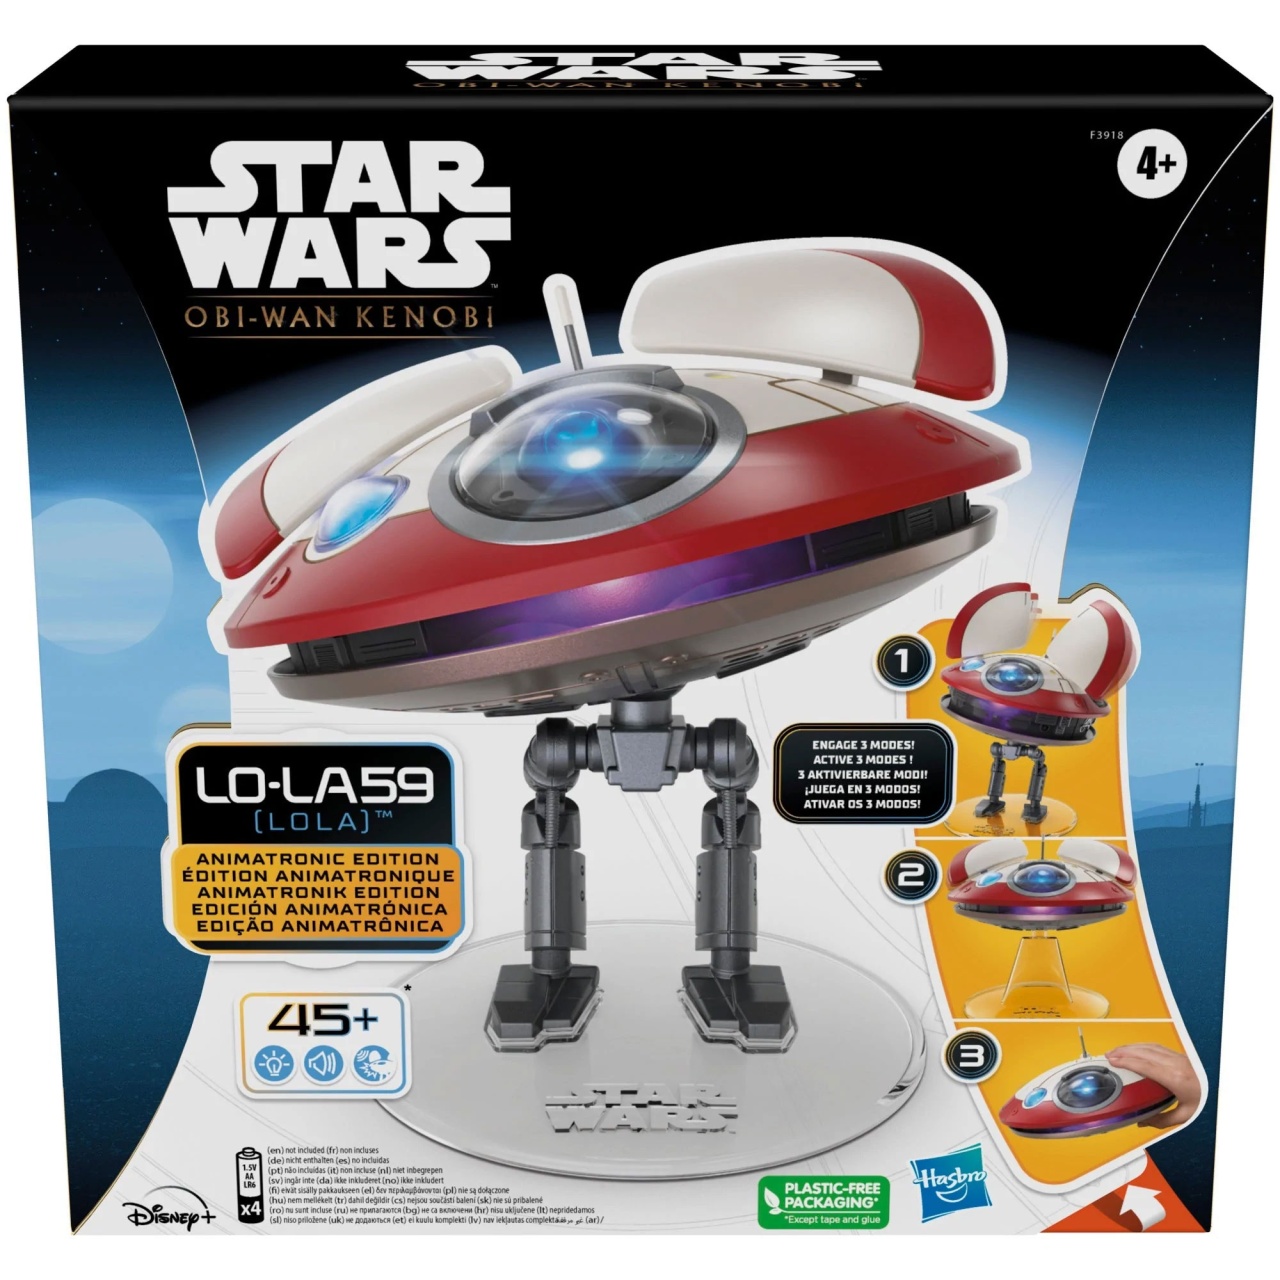 Star Wars Obi- Wan Kenobi L0-LA59 (Lola) Animatronik Edition